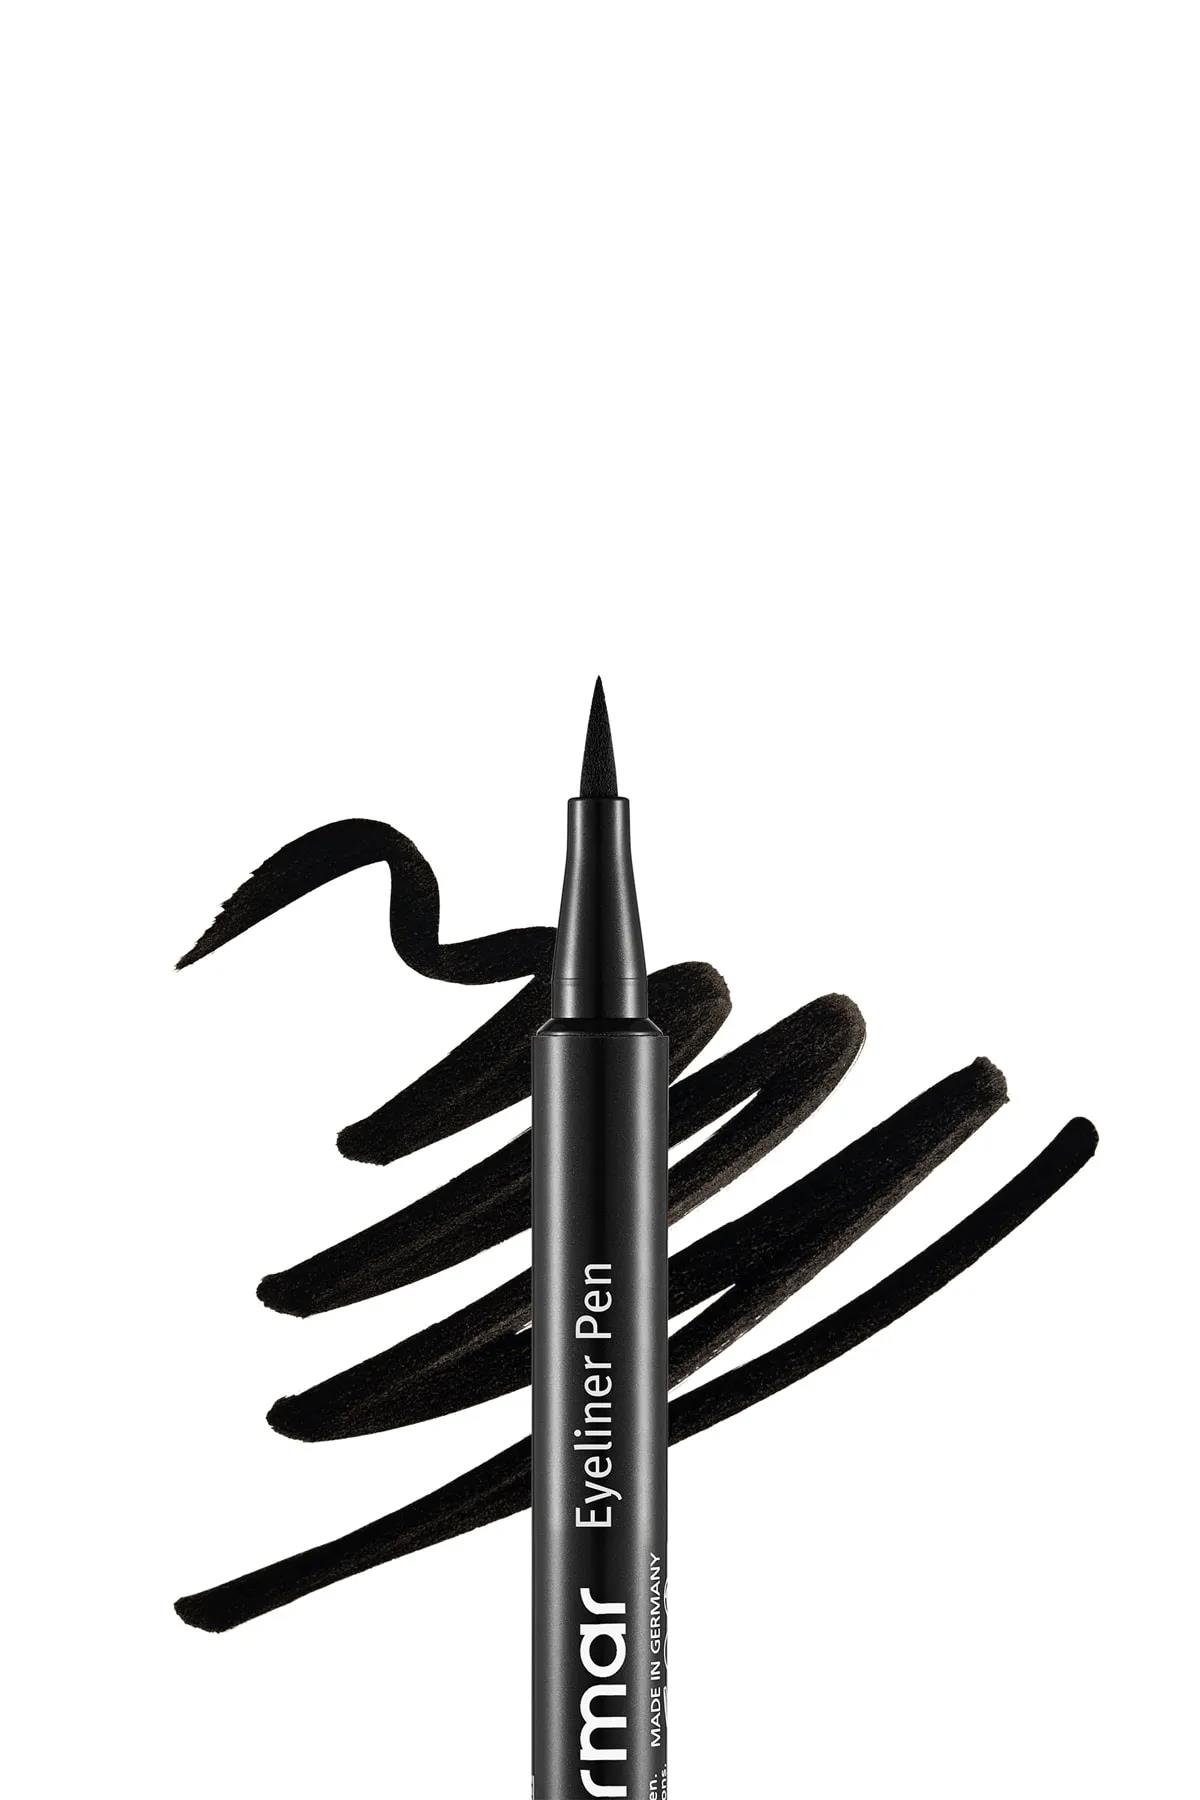 flormar-eyeliner-pen-goz-kalemi-siyah-001-9311-1.jpg